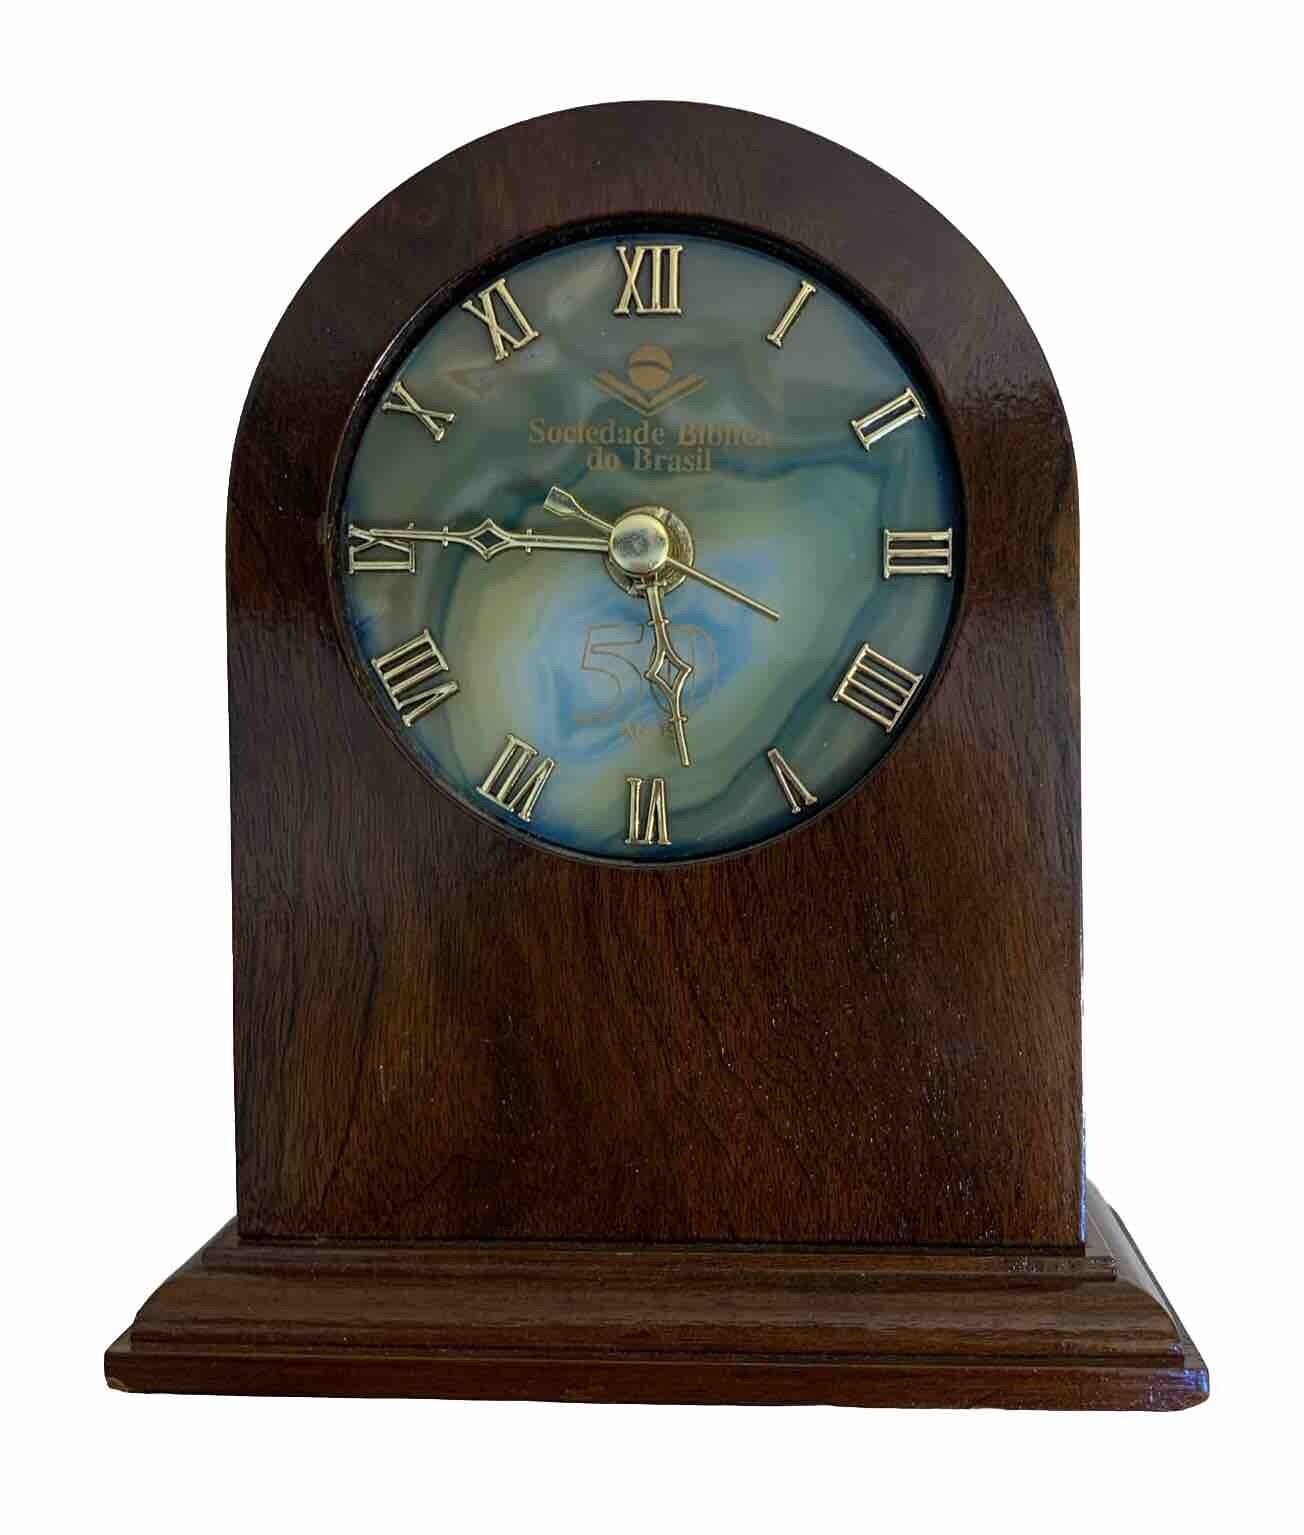 Brazil Marble Desk Clock Sociedade Biblica Do Brasil 50 Anos - 6\